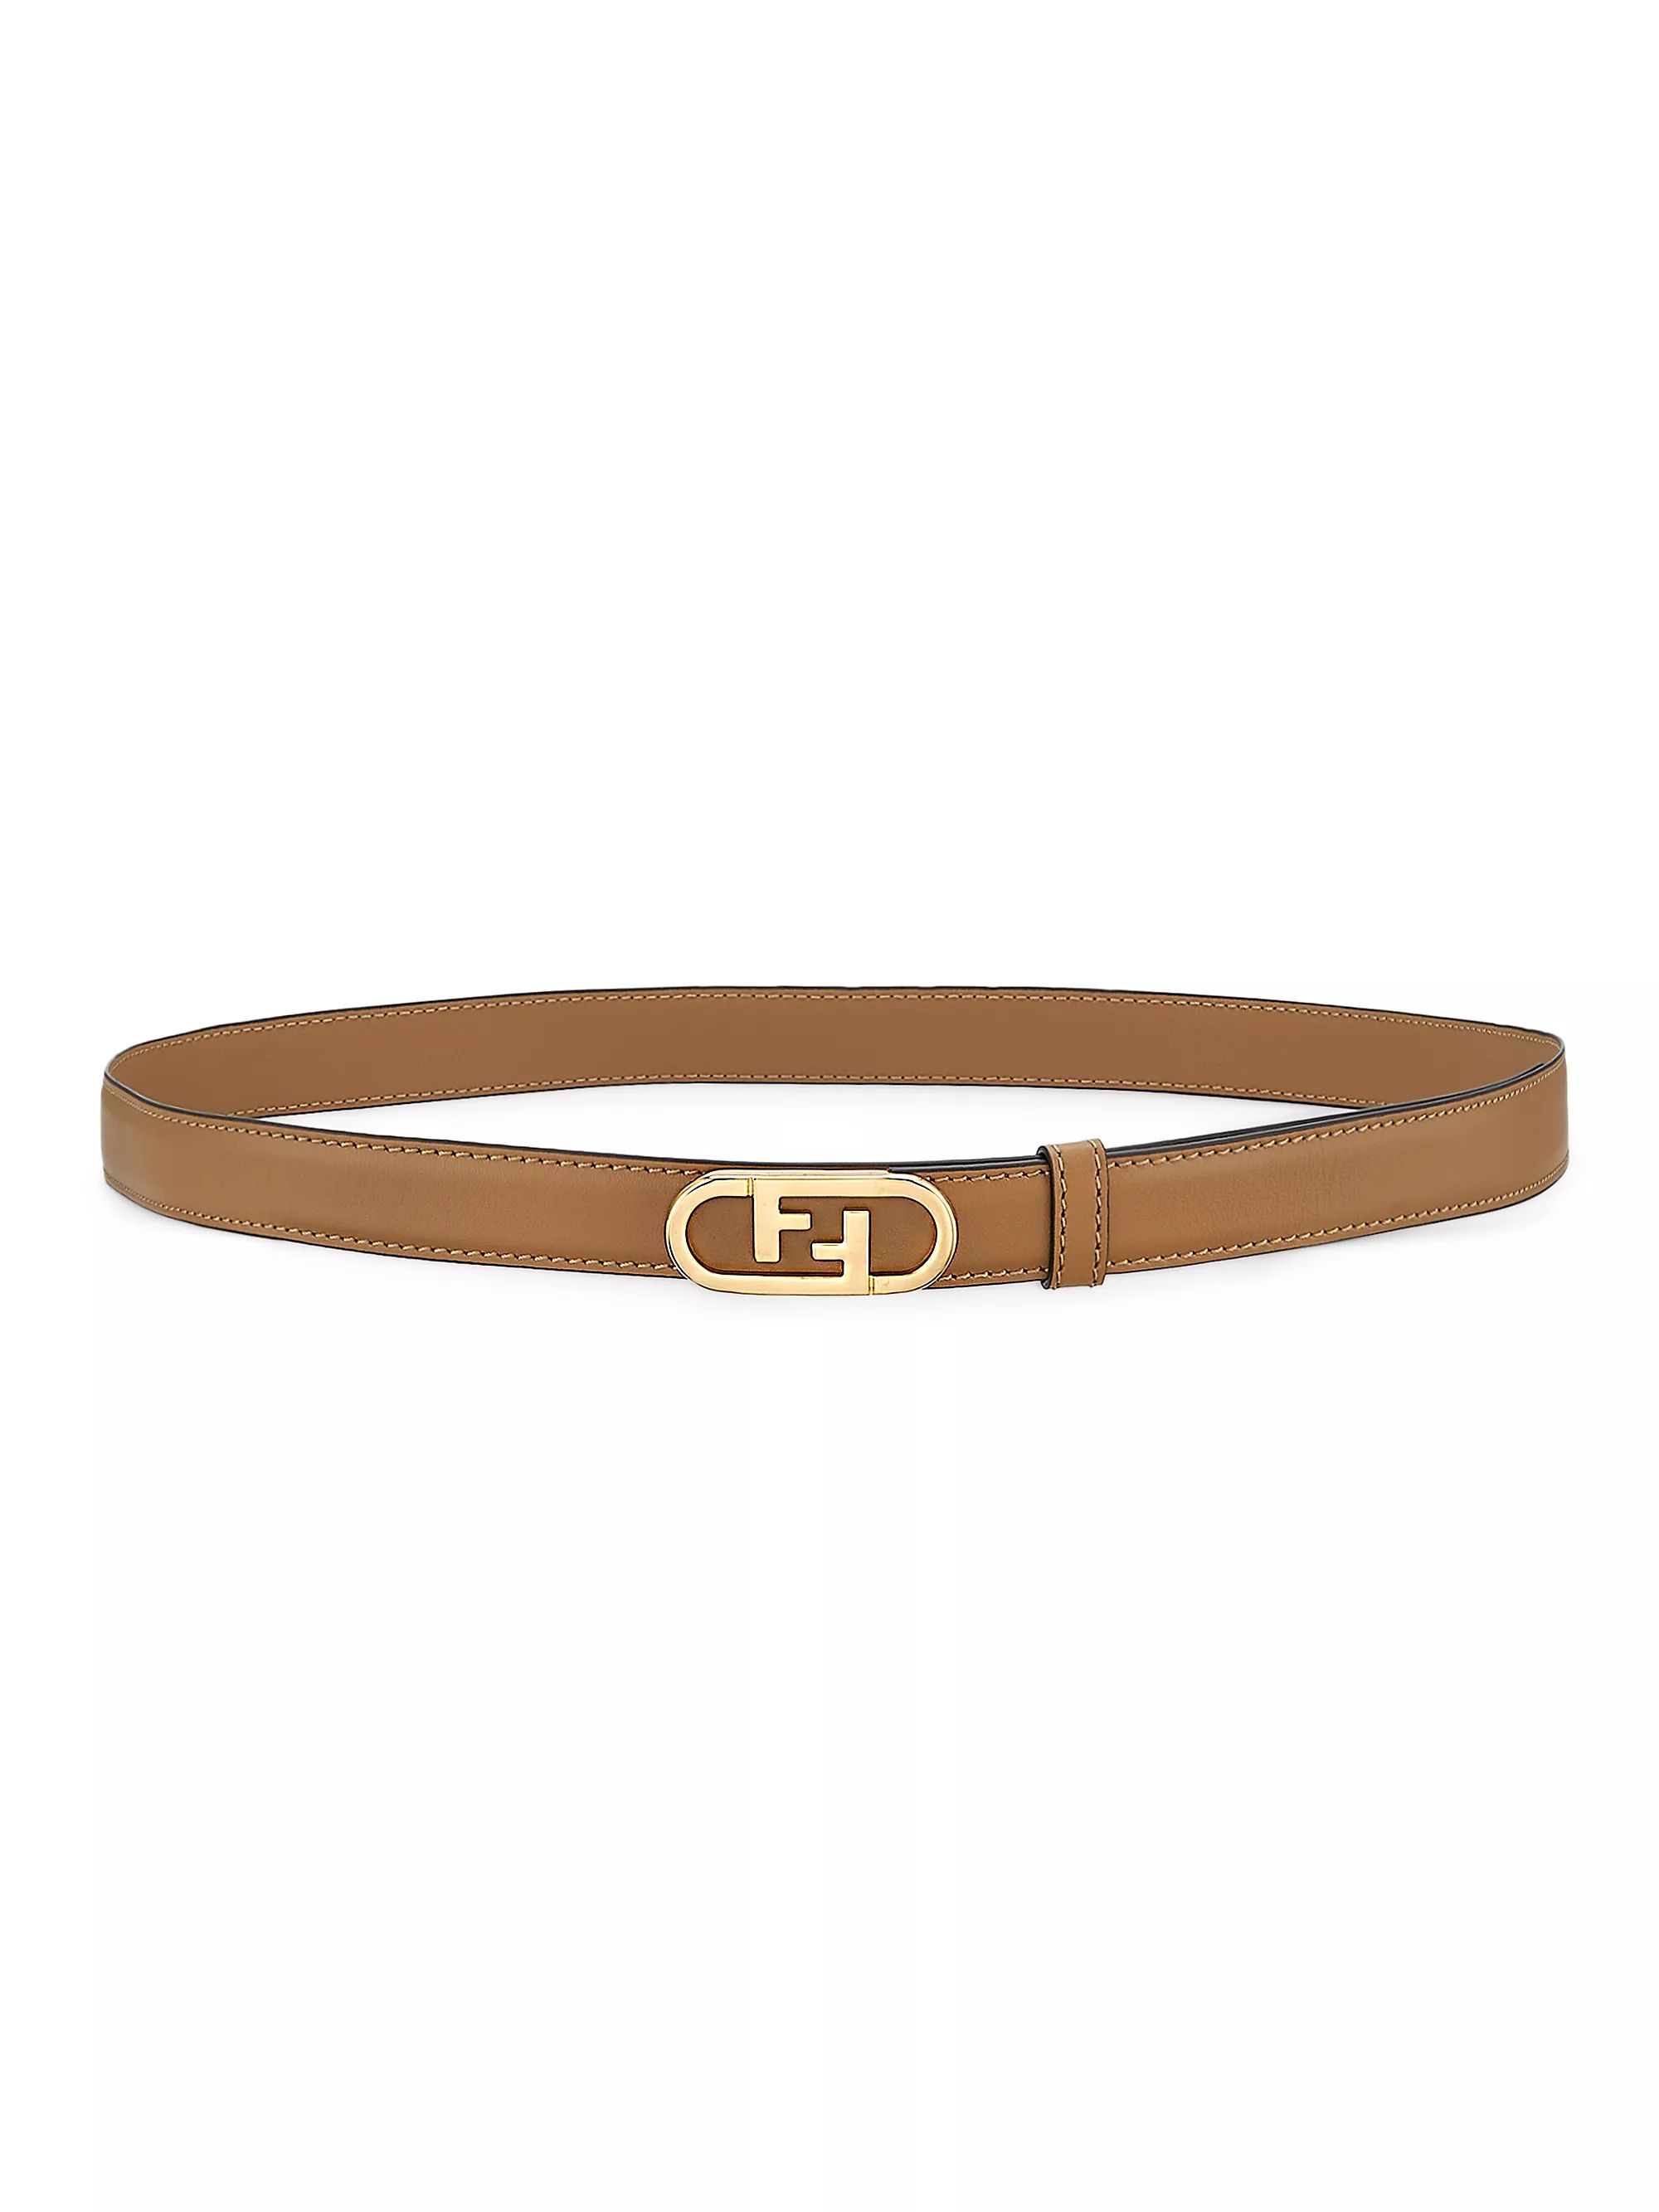 FF Logo Leather Belt | Saks Fifth Avenue